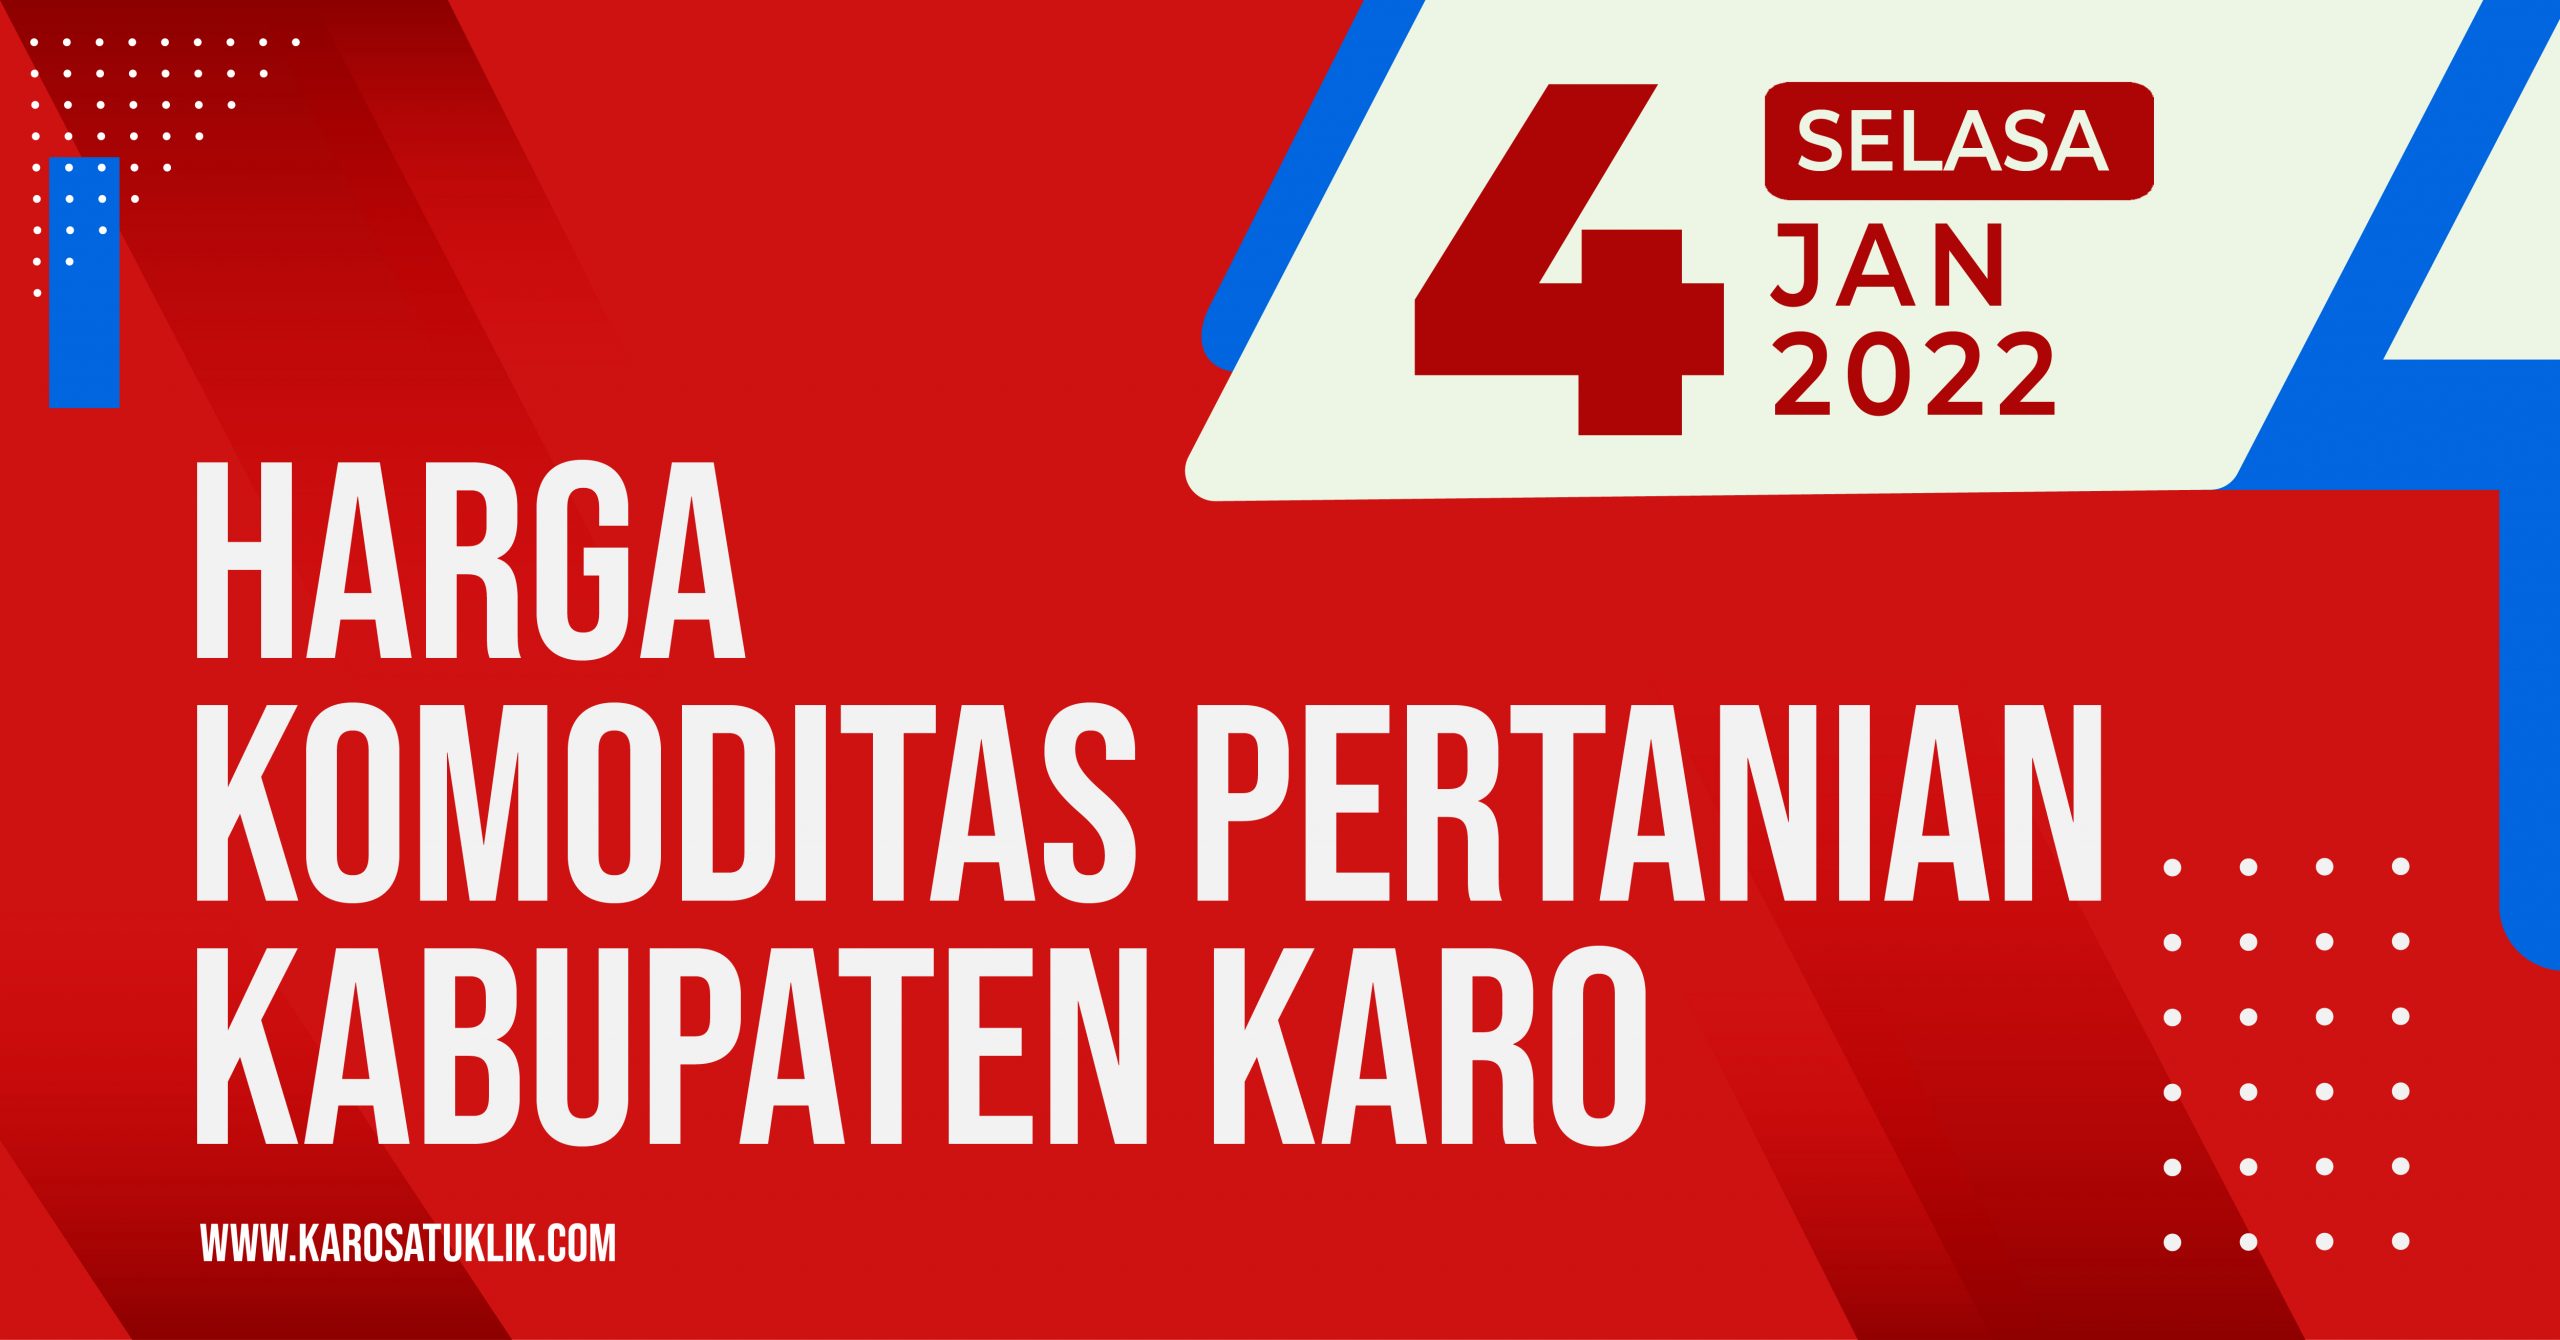 Daftar Harga Komoditas Pertanian Kabupaten Karo, 4 Januari 2022